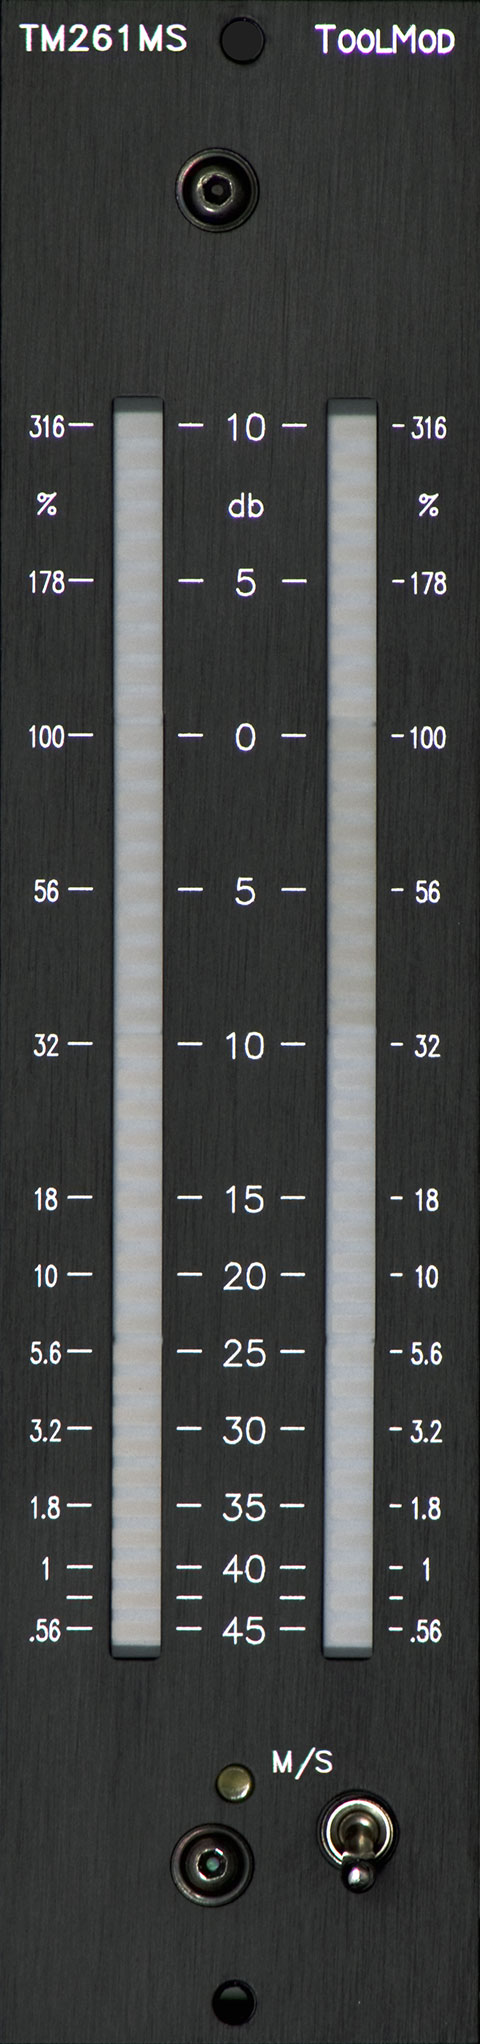 Stereo Peakmeter with L/R or M/S Display, Range +10 to -45 dB, vertical Version